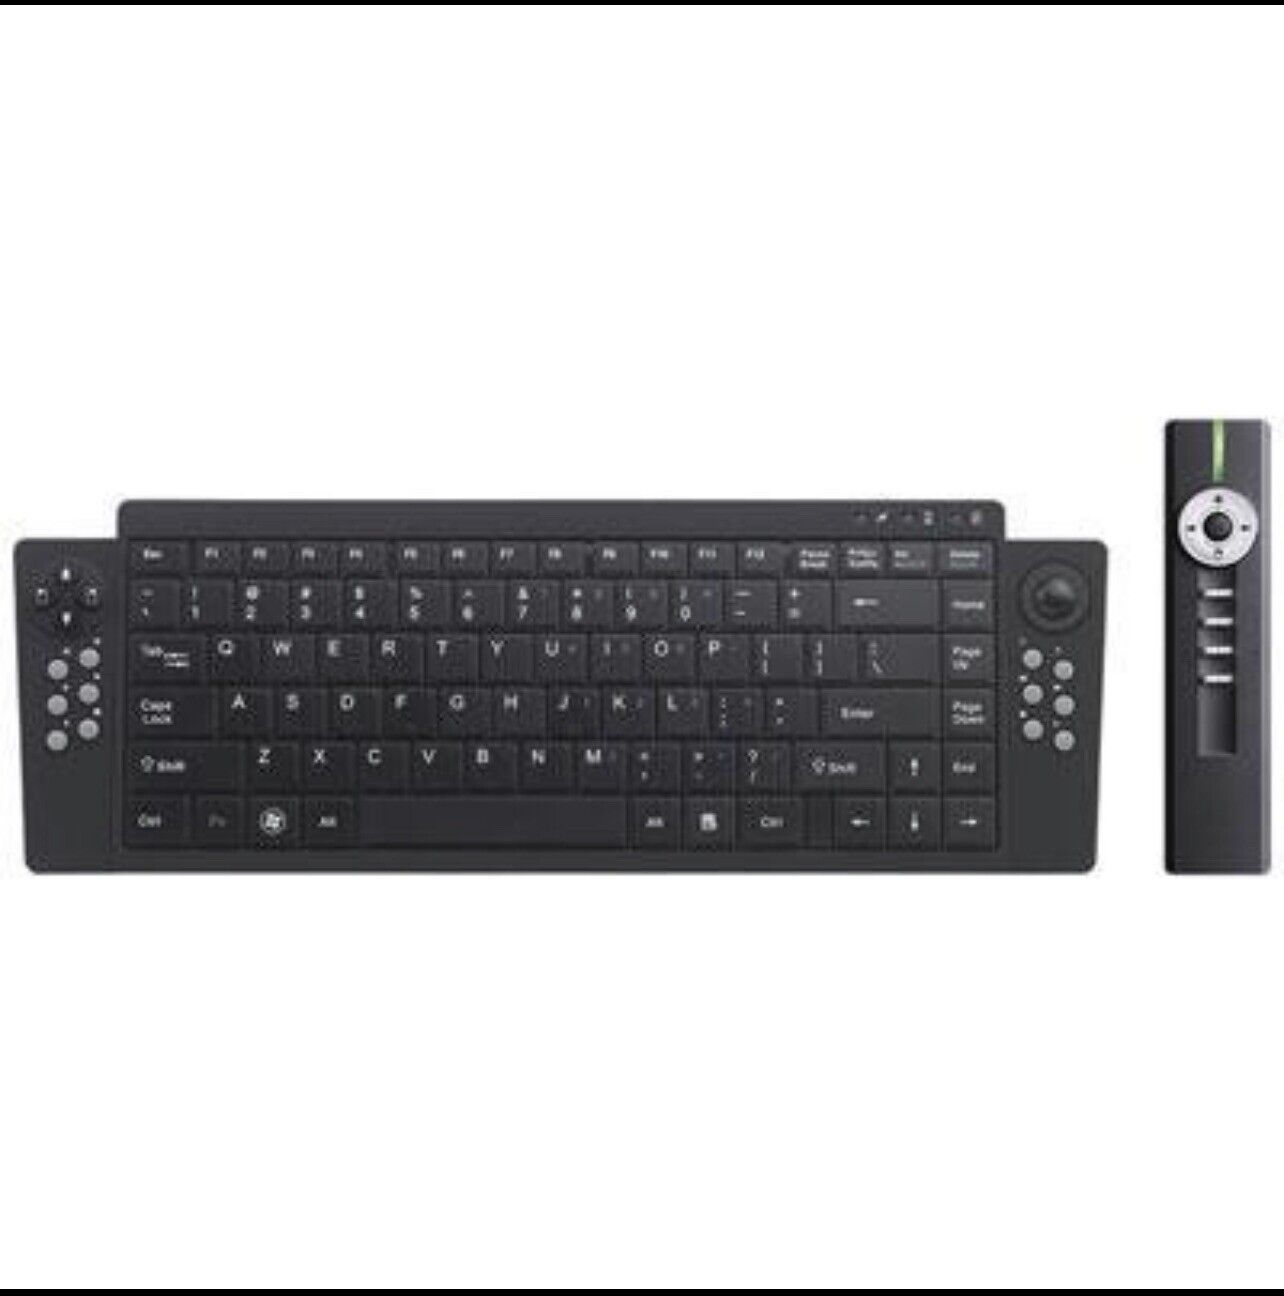 VersaPoint Presenter Suite Wireless Keyboard. Rechargeable Keyboard.